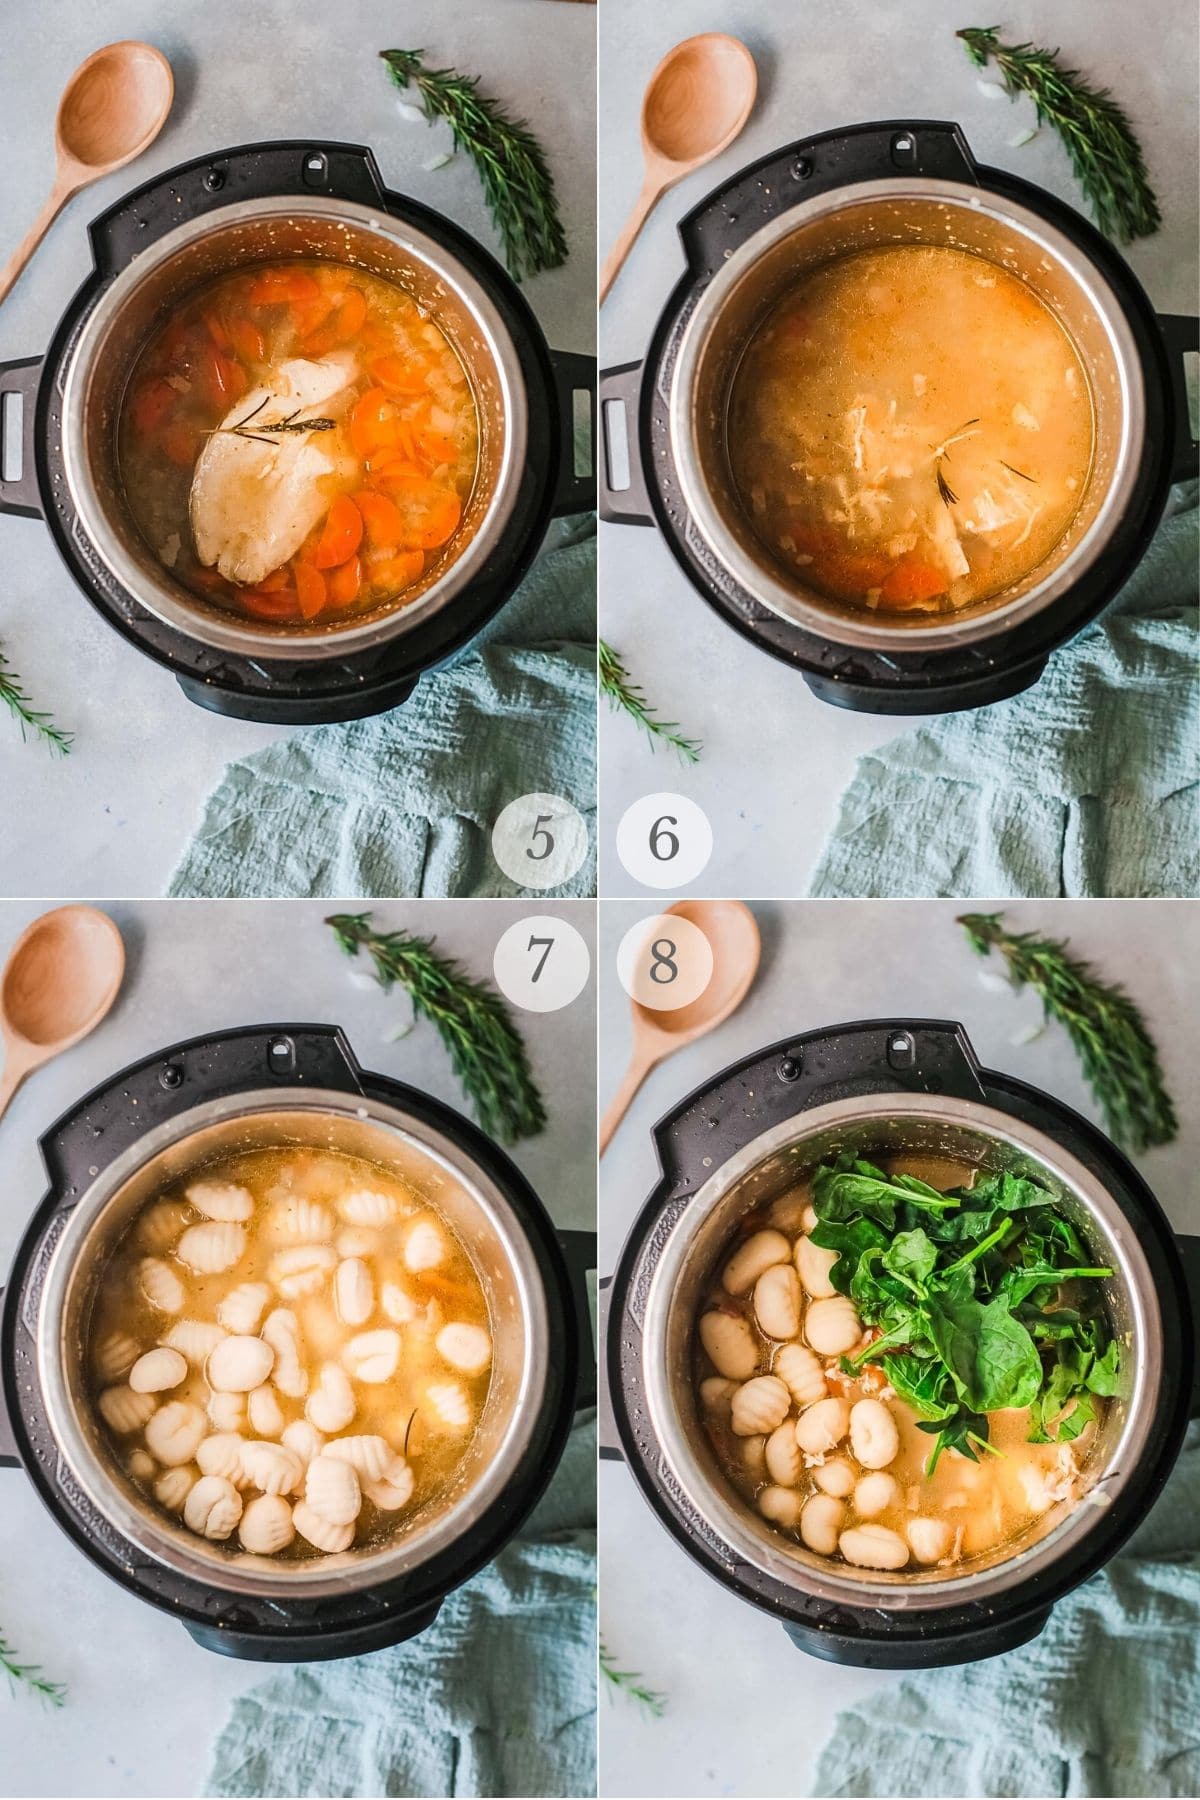 chicken gnocchi soup recipe steps 5-8